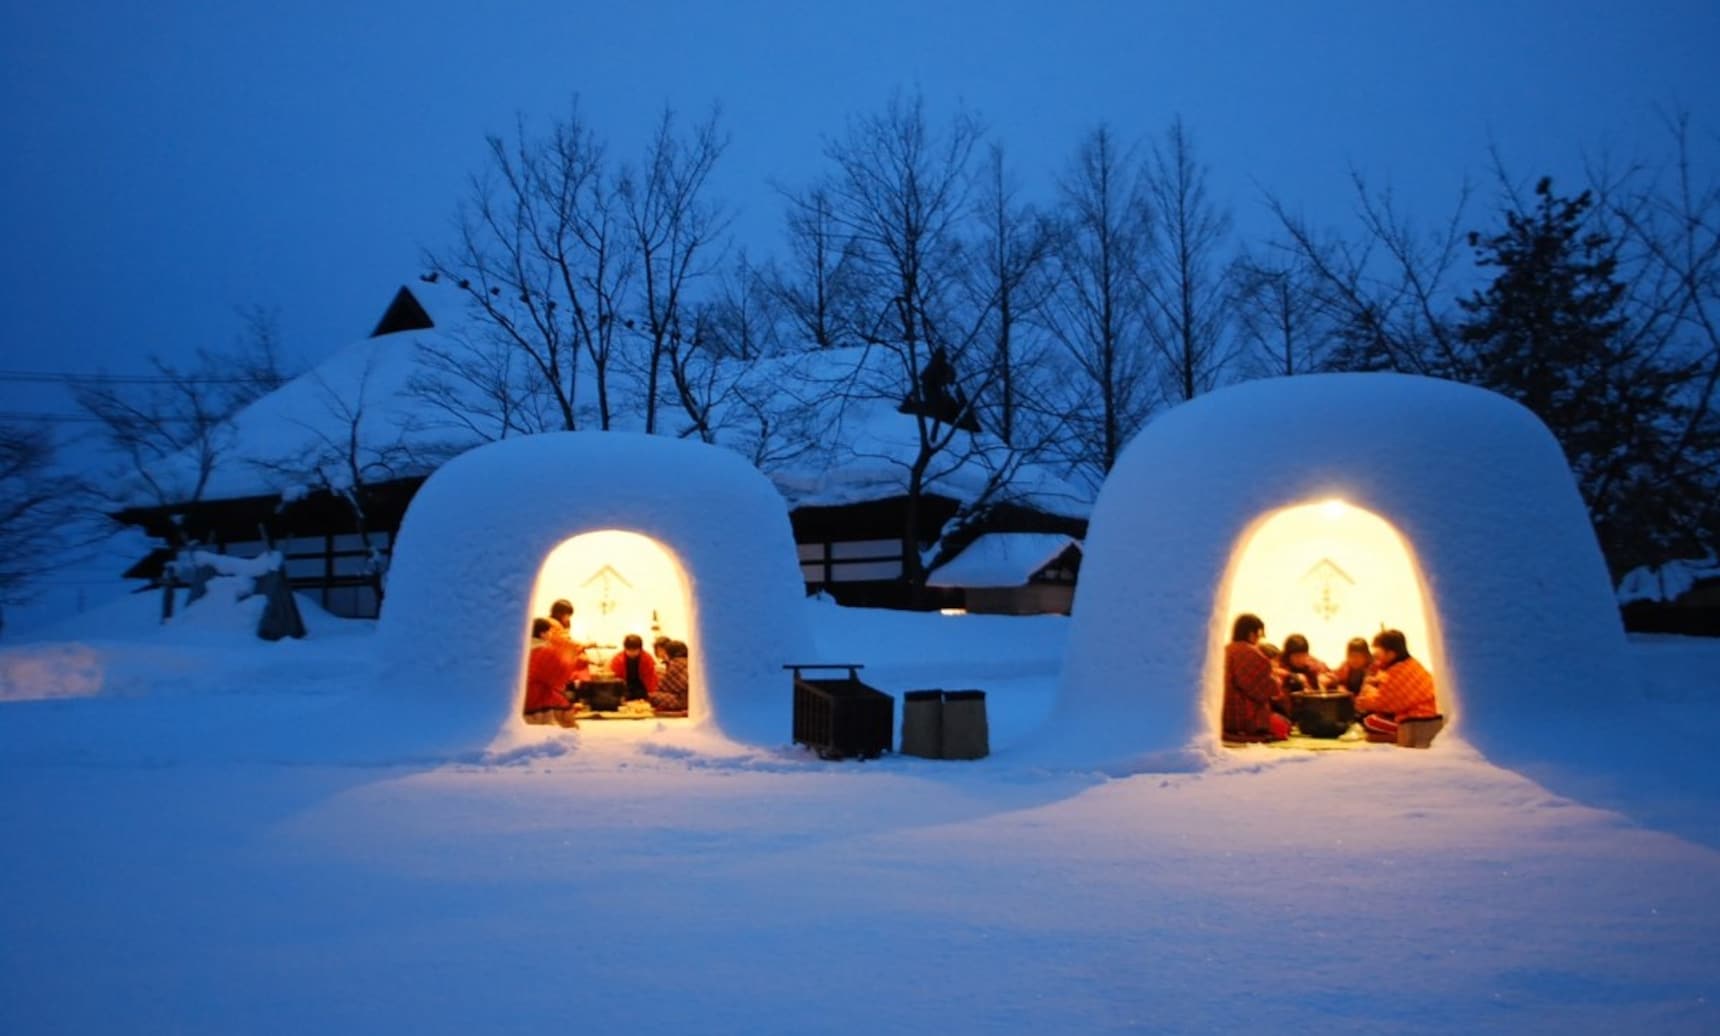 net 日本的冬季除了一些精彩的户外运动之外,还能住进暖意洋洋的"雪屋